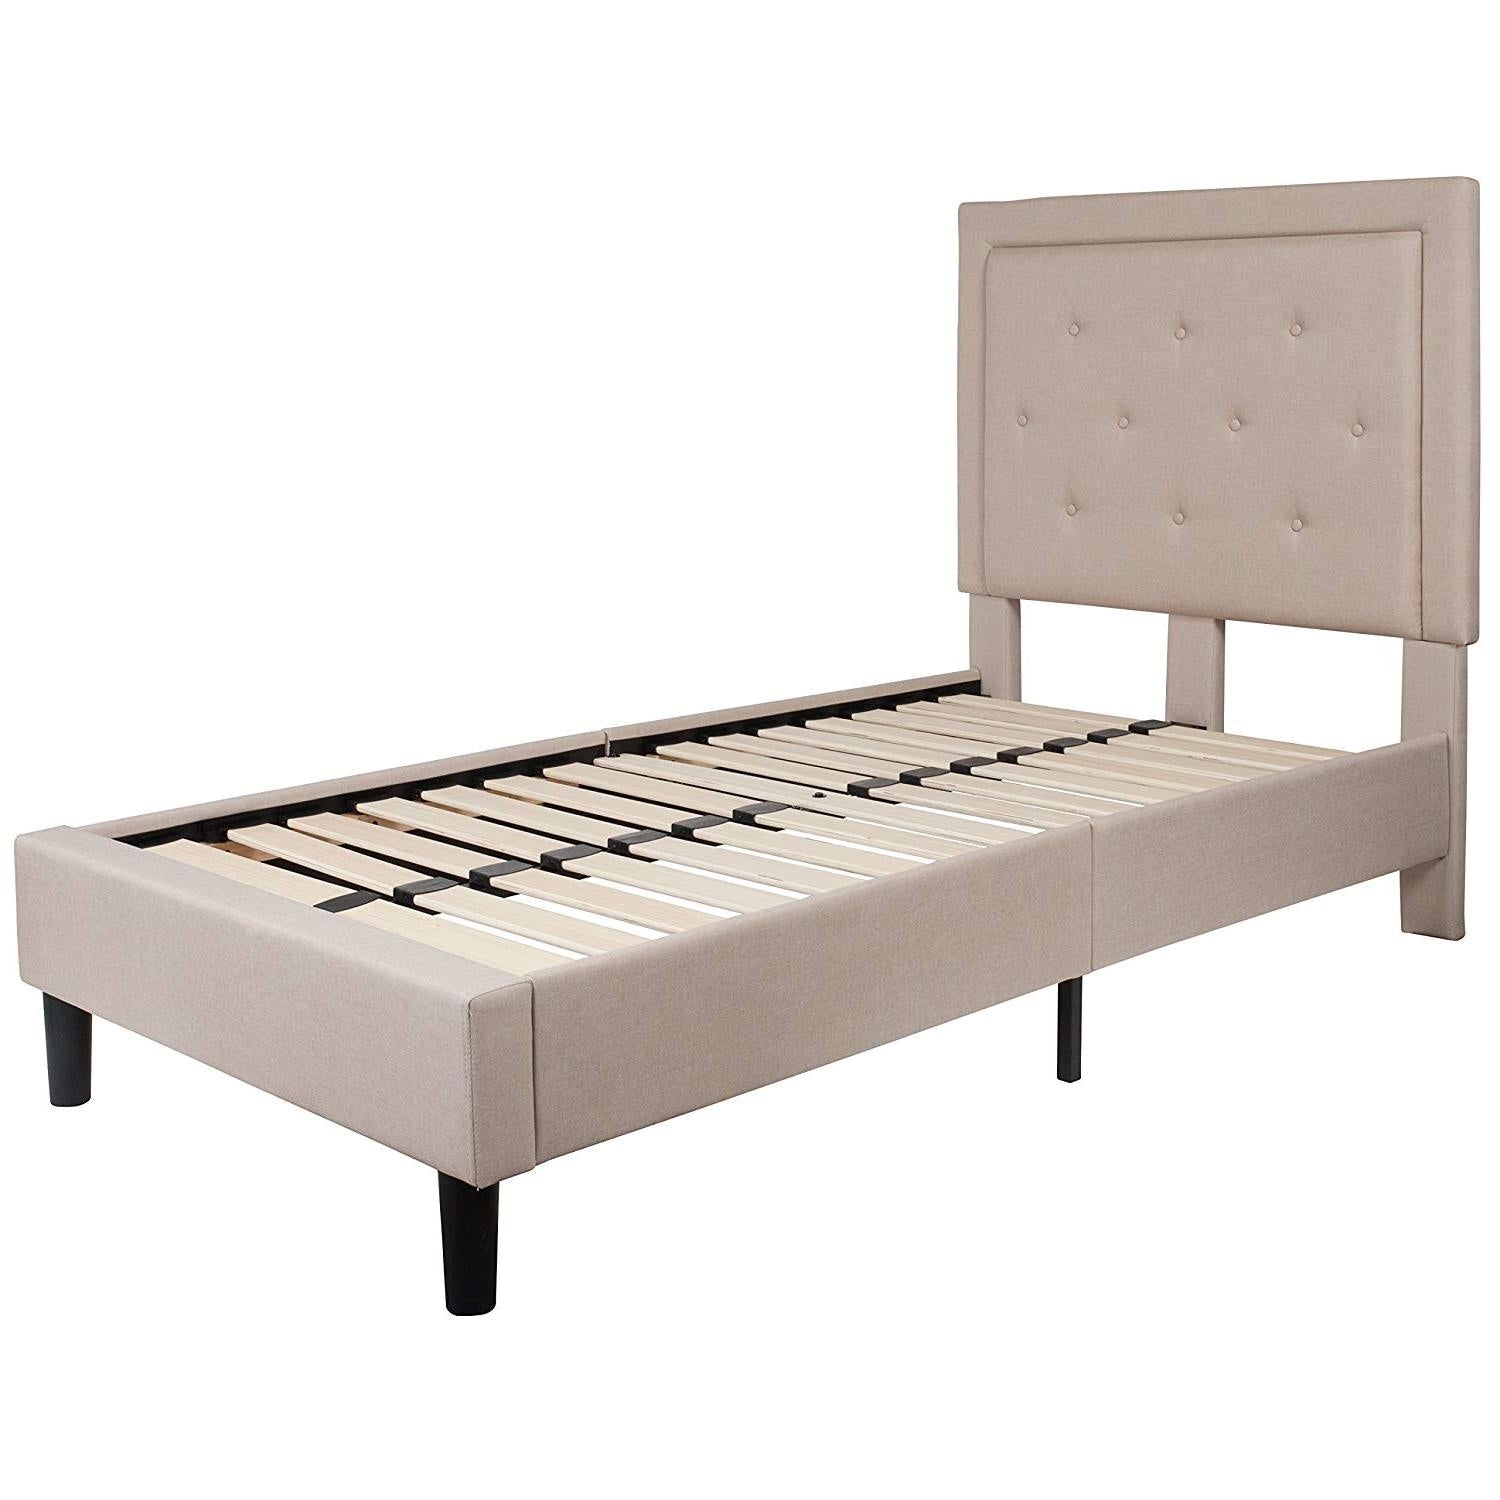 Bedroom > Bed Frames > Platform Beds - Twin Beige Fabric Upholstered Platform Bed With Button Tufted Headboard